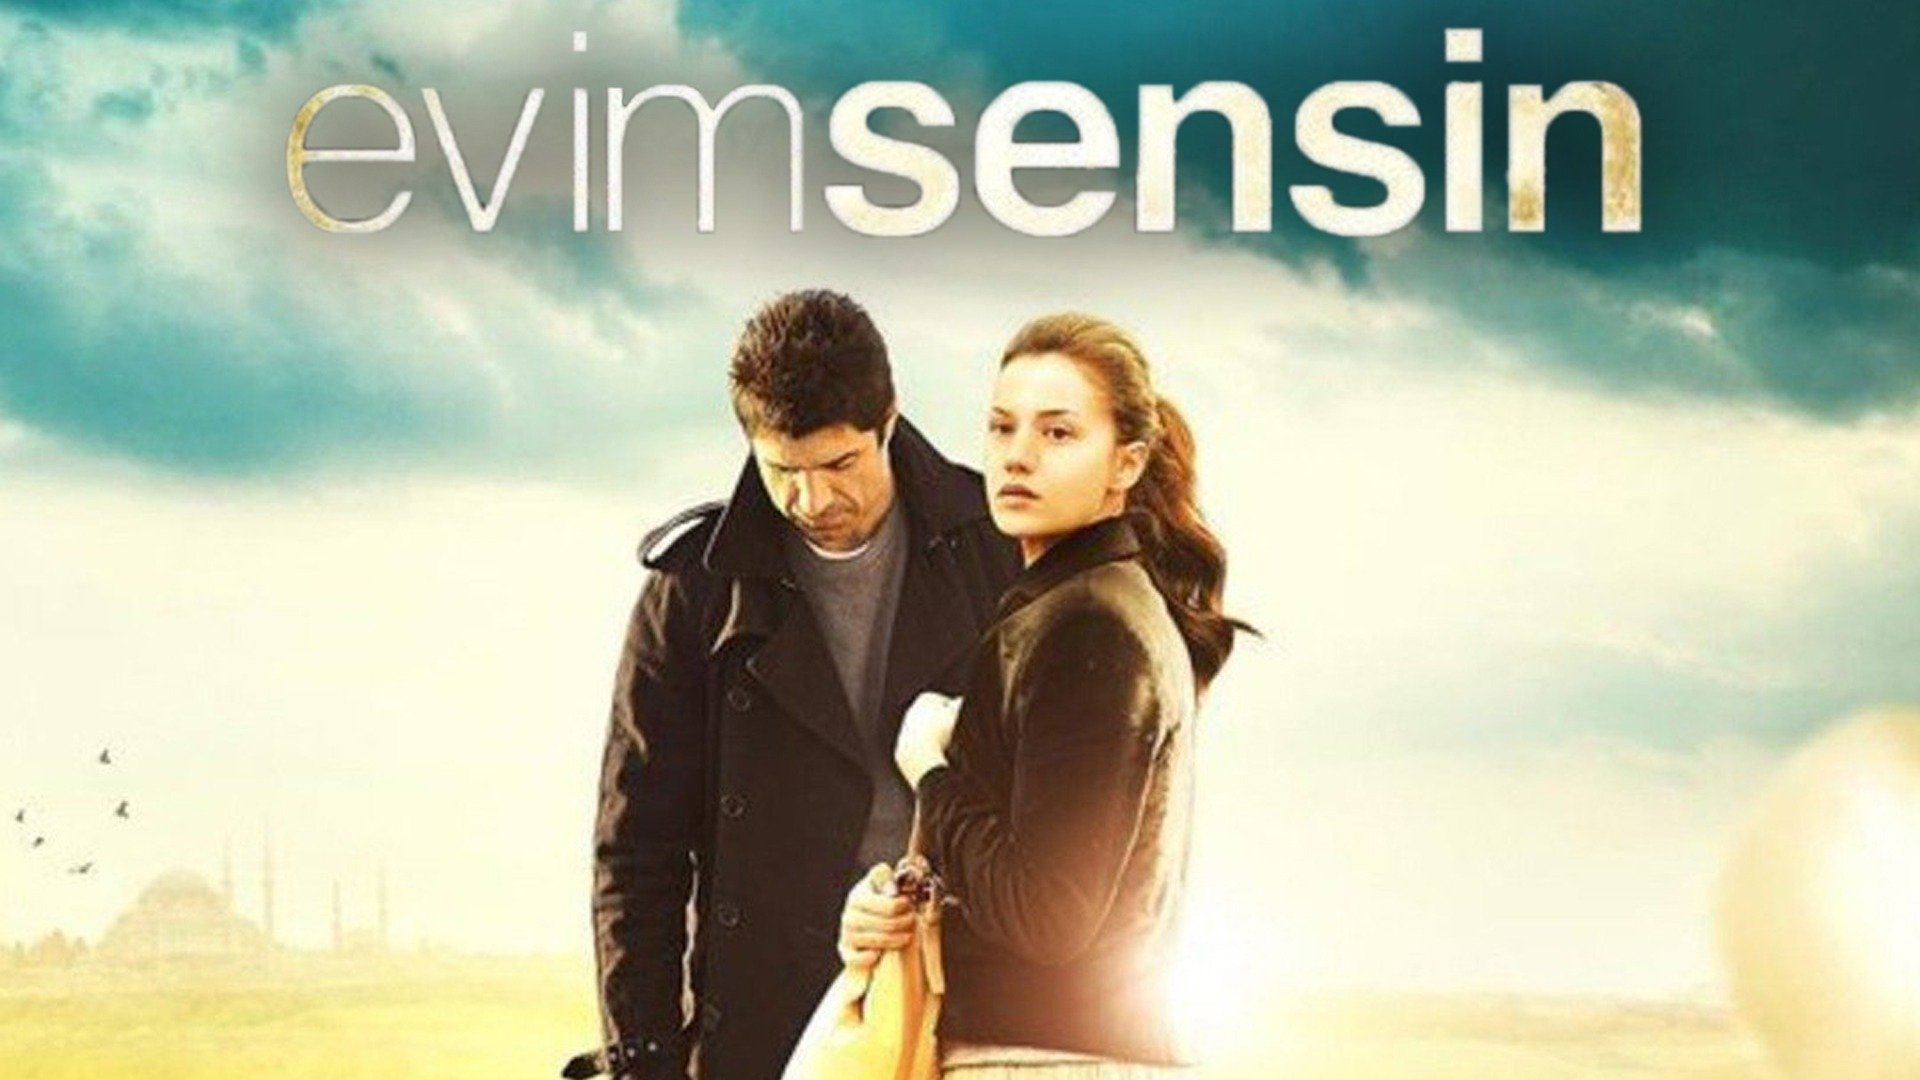 Evim Sensin (Film) | Turkse Nederlander